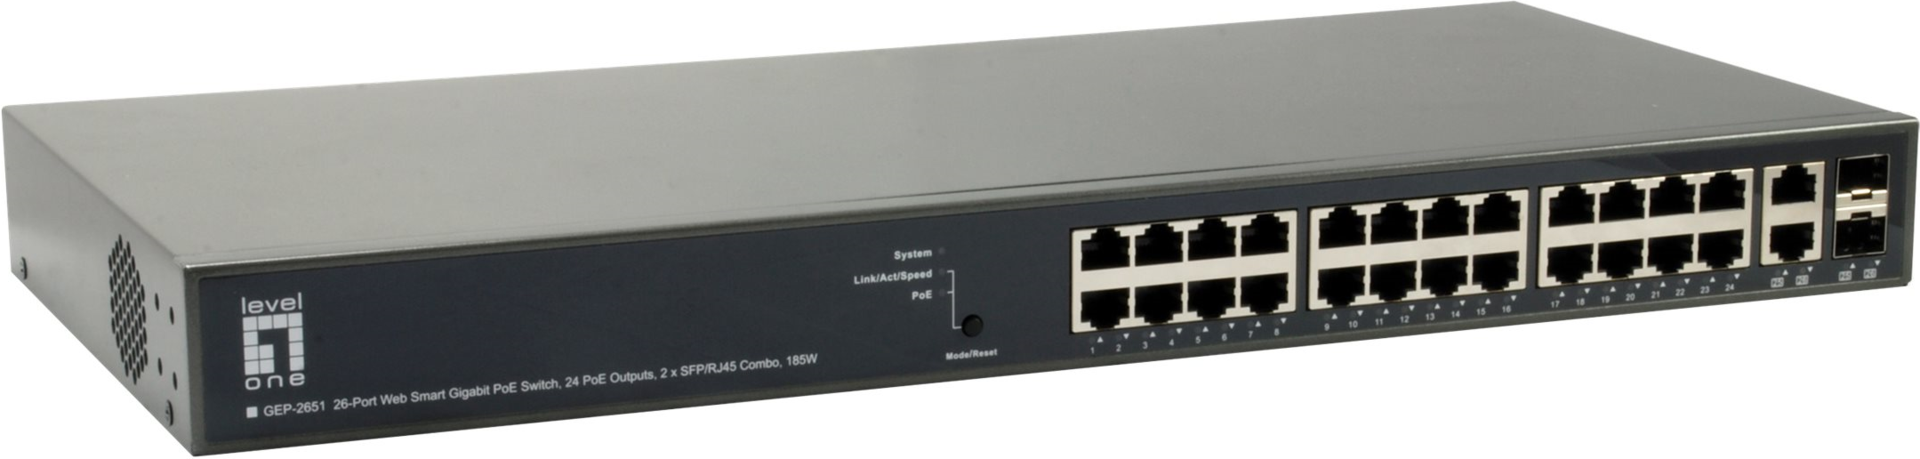 26-Port Web Managed GE PoE+ Switch, 2x SFP/RJ45 Combo (185W) Hersteller: LEVELONE (GEP-2651)